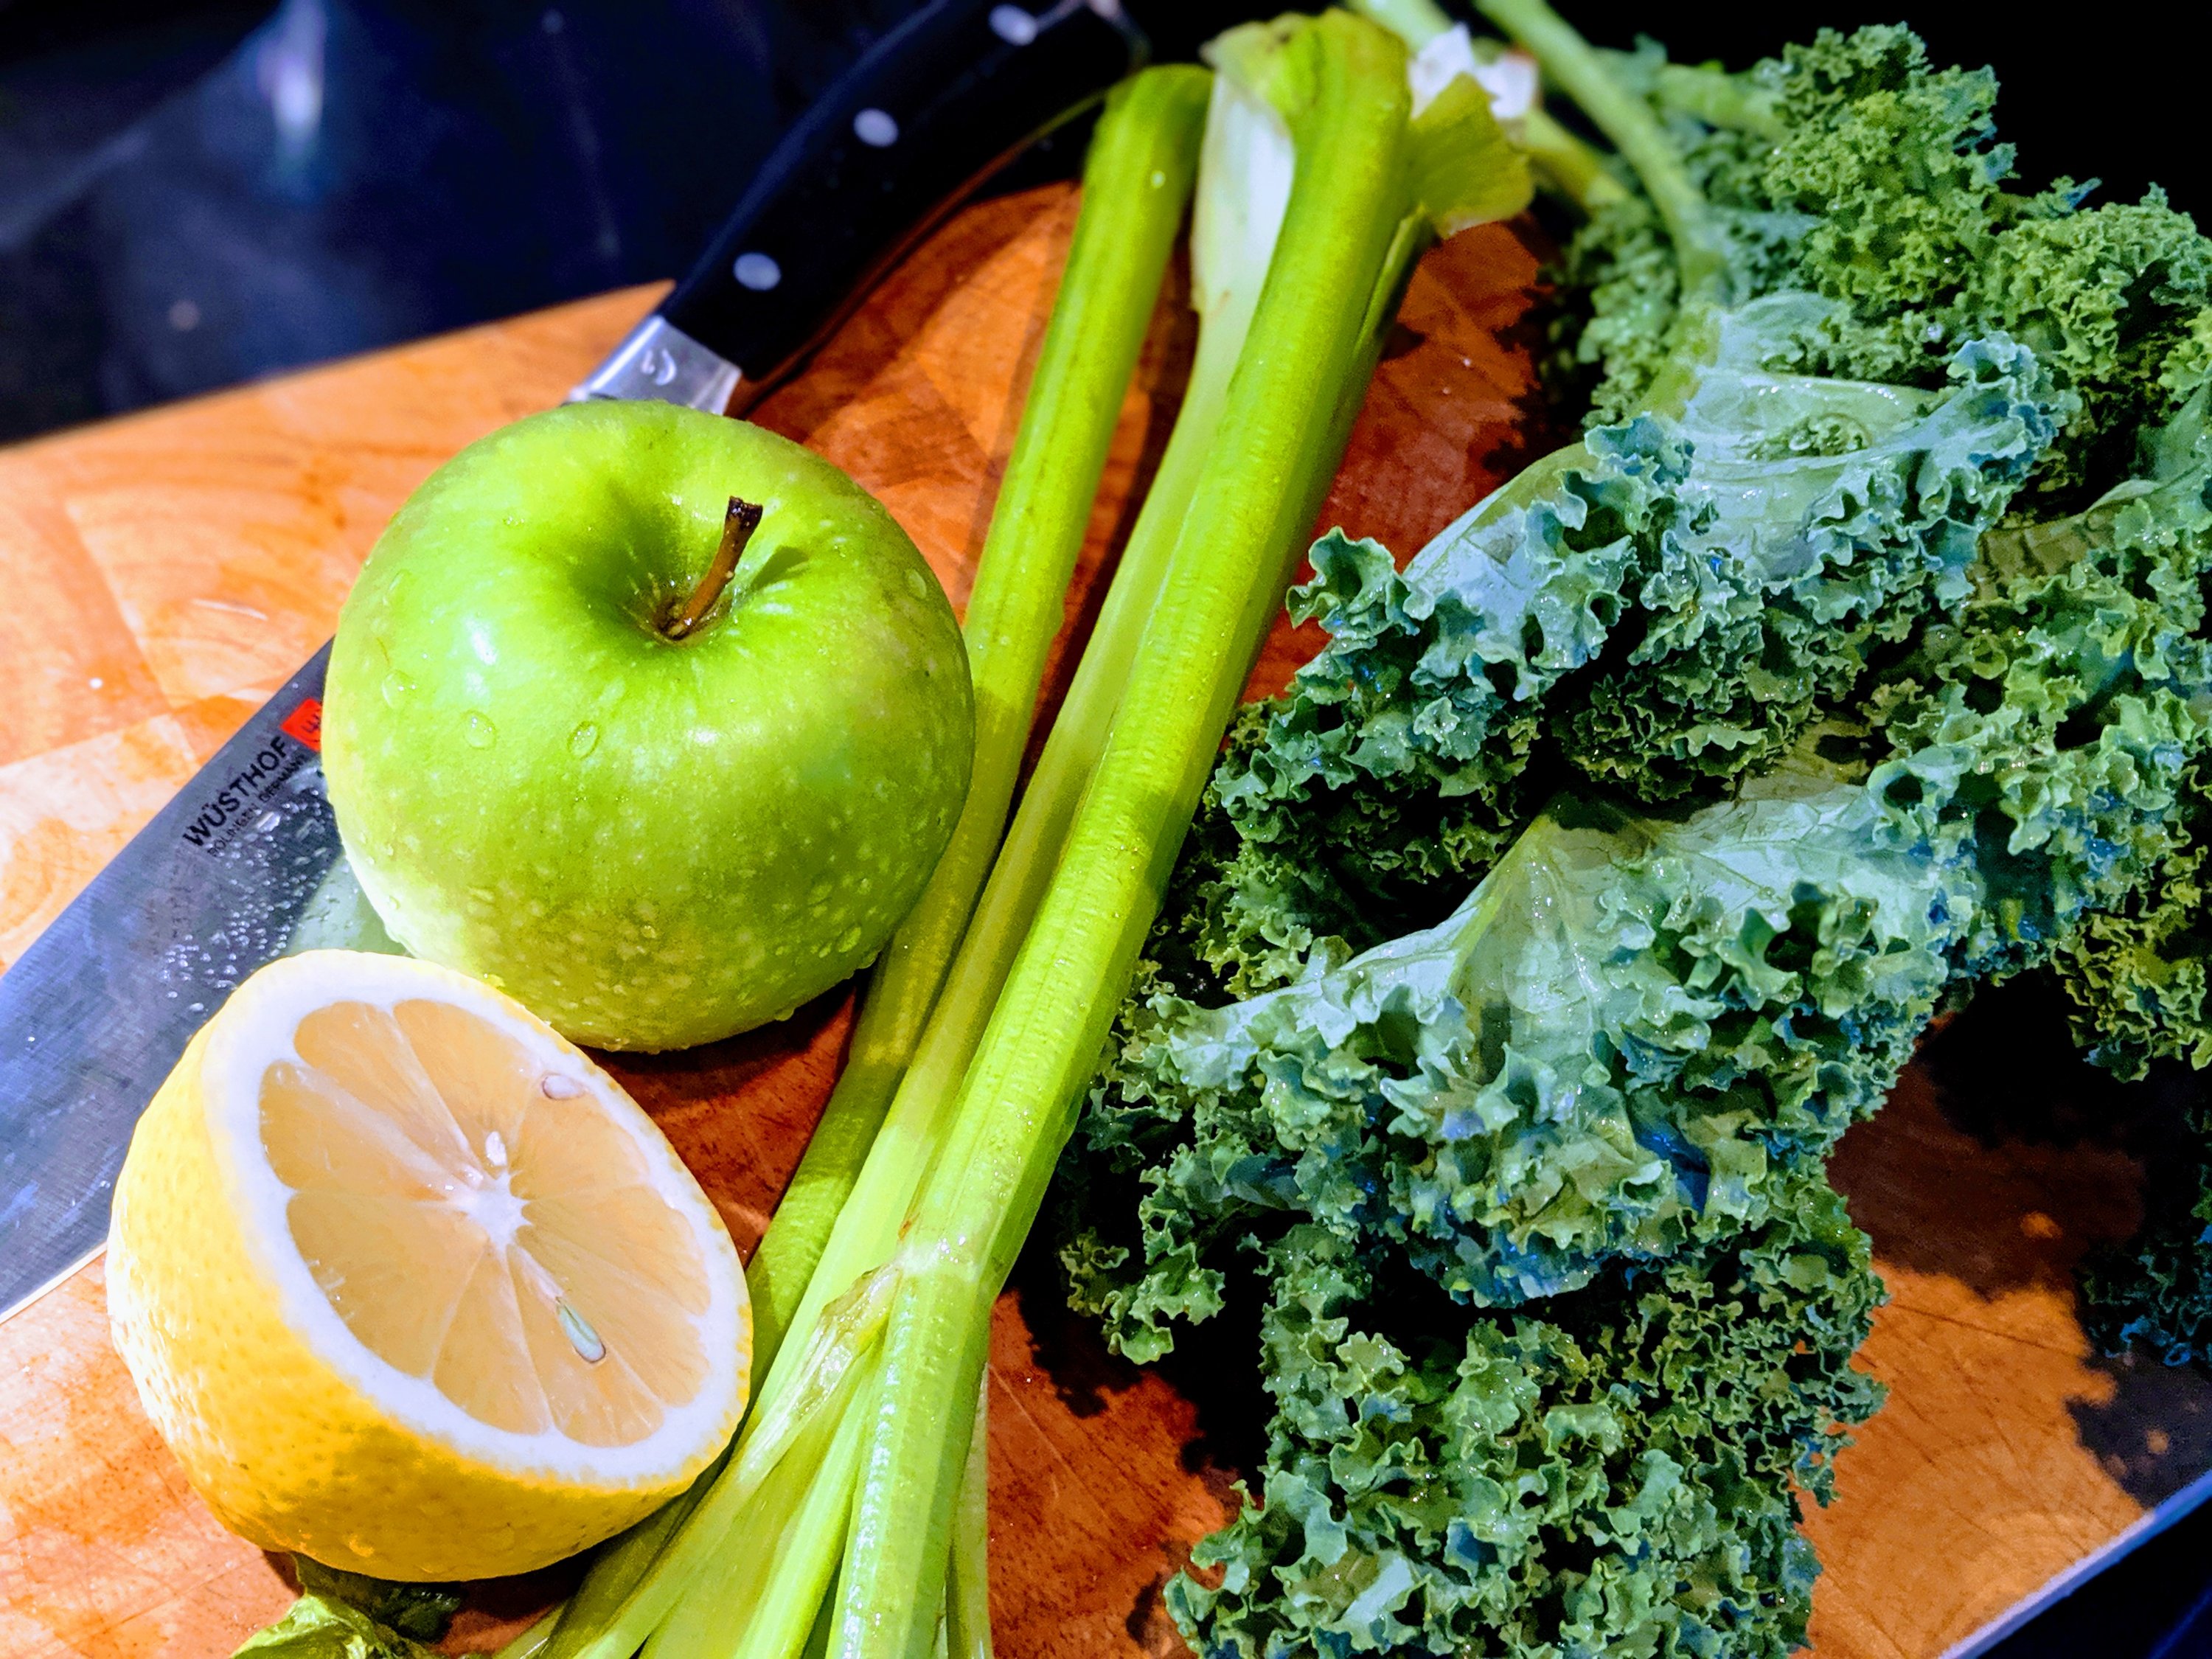 Kale, lemon, celery, and a Granny Smith apple